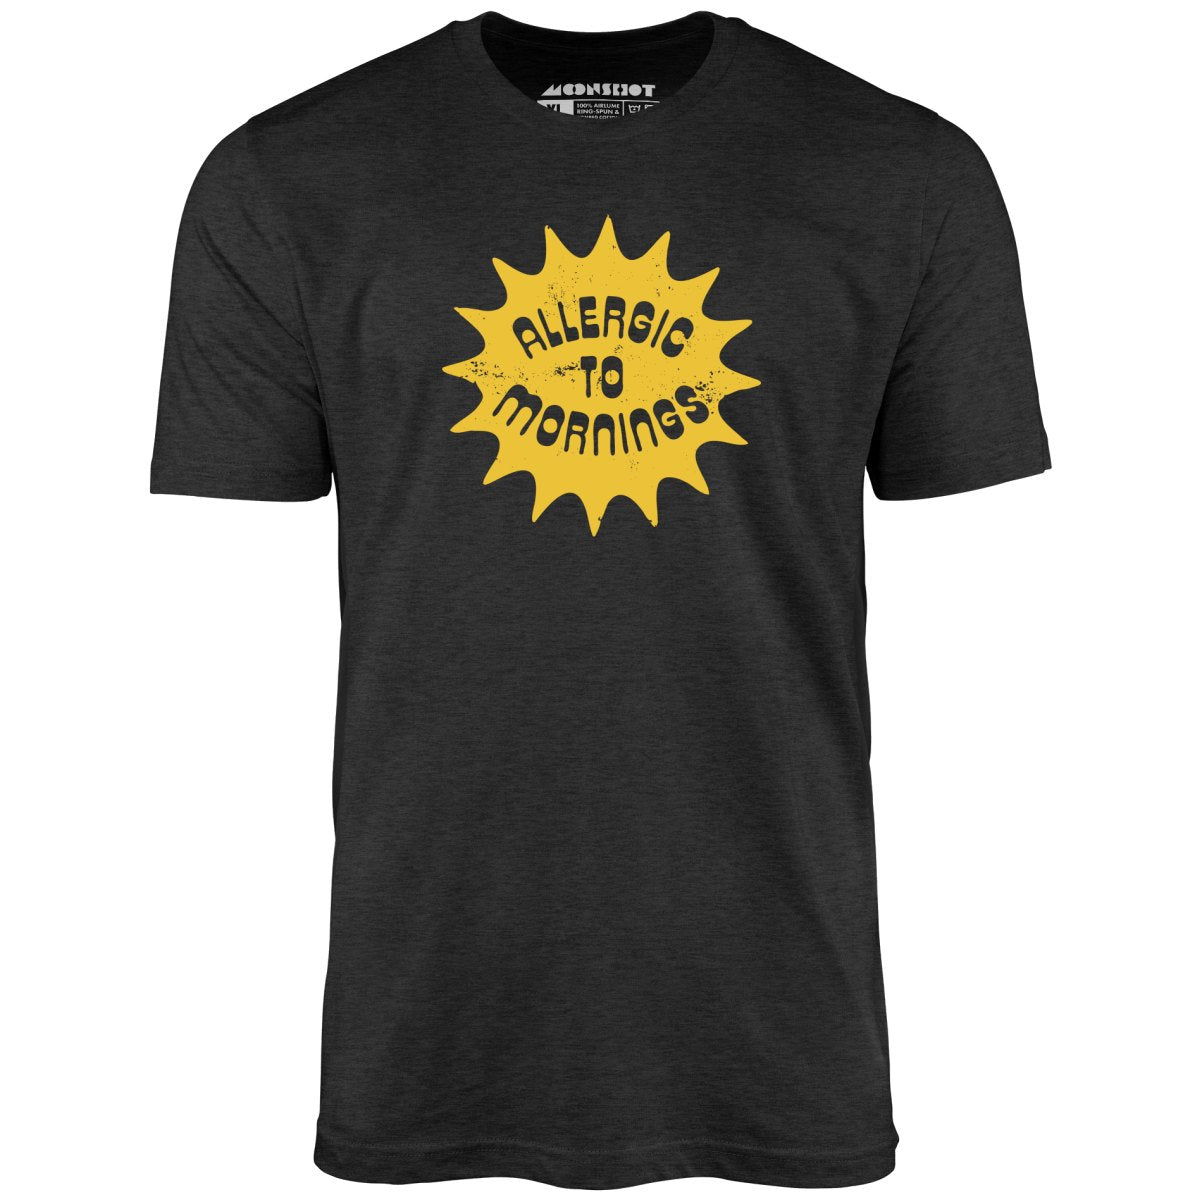 Allergic to Mornings - Unisex T-Shirt